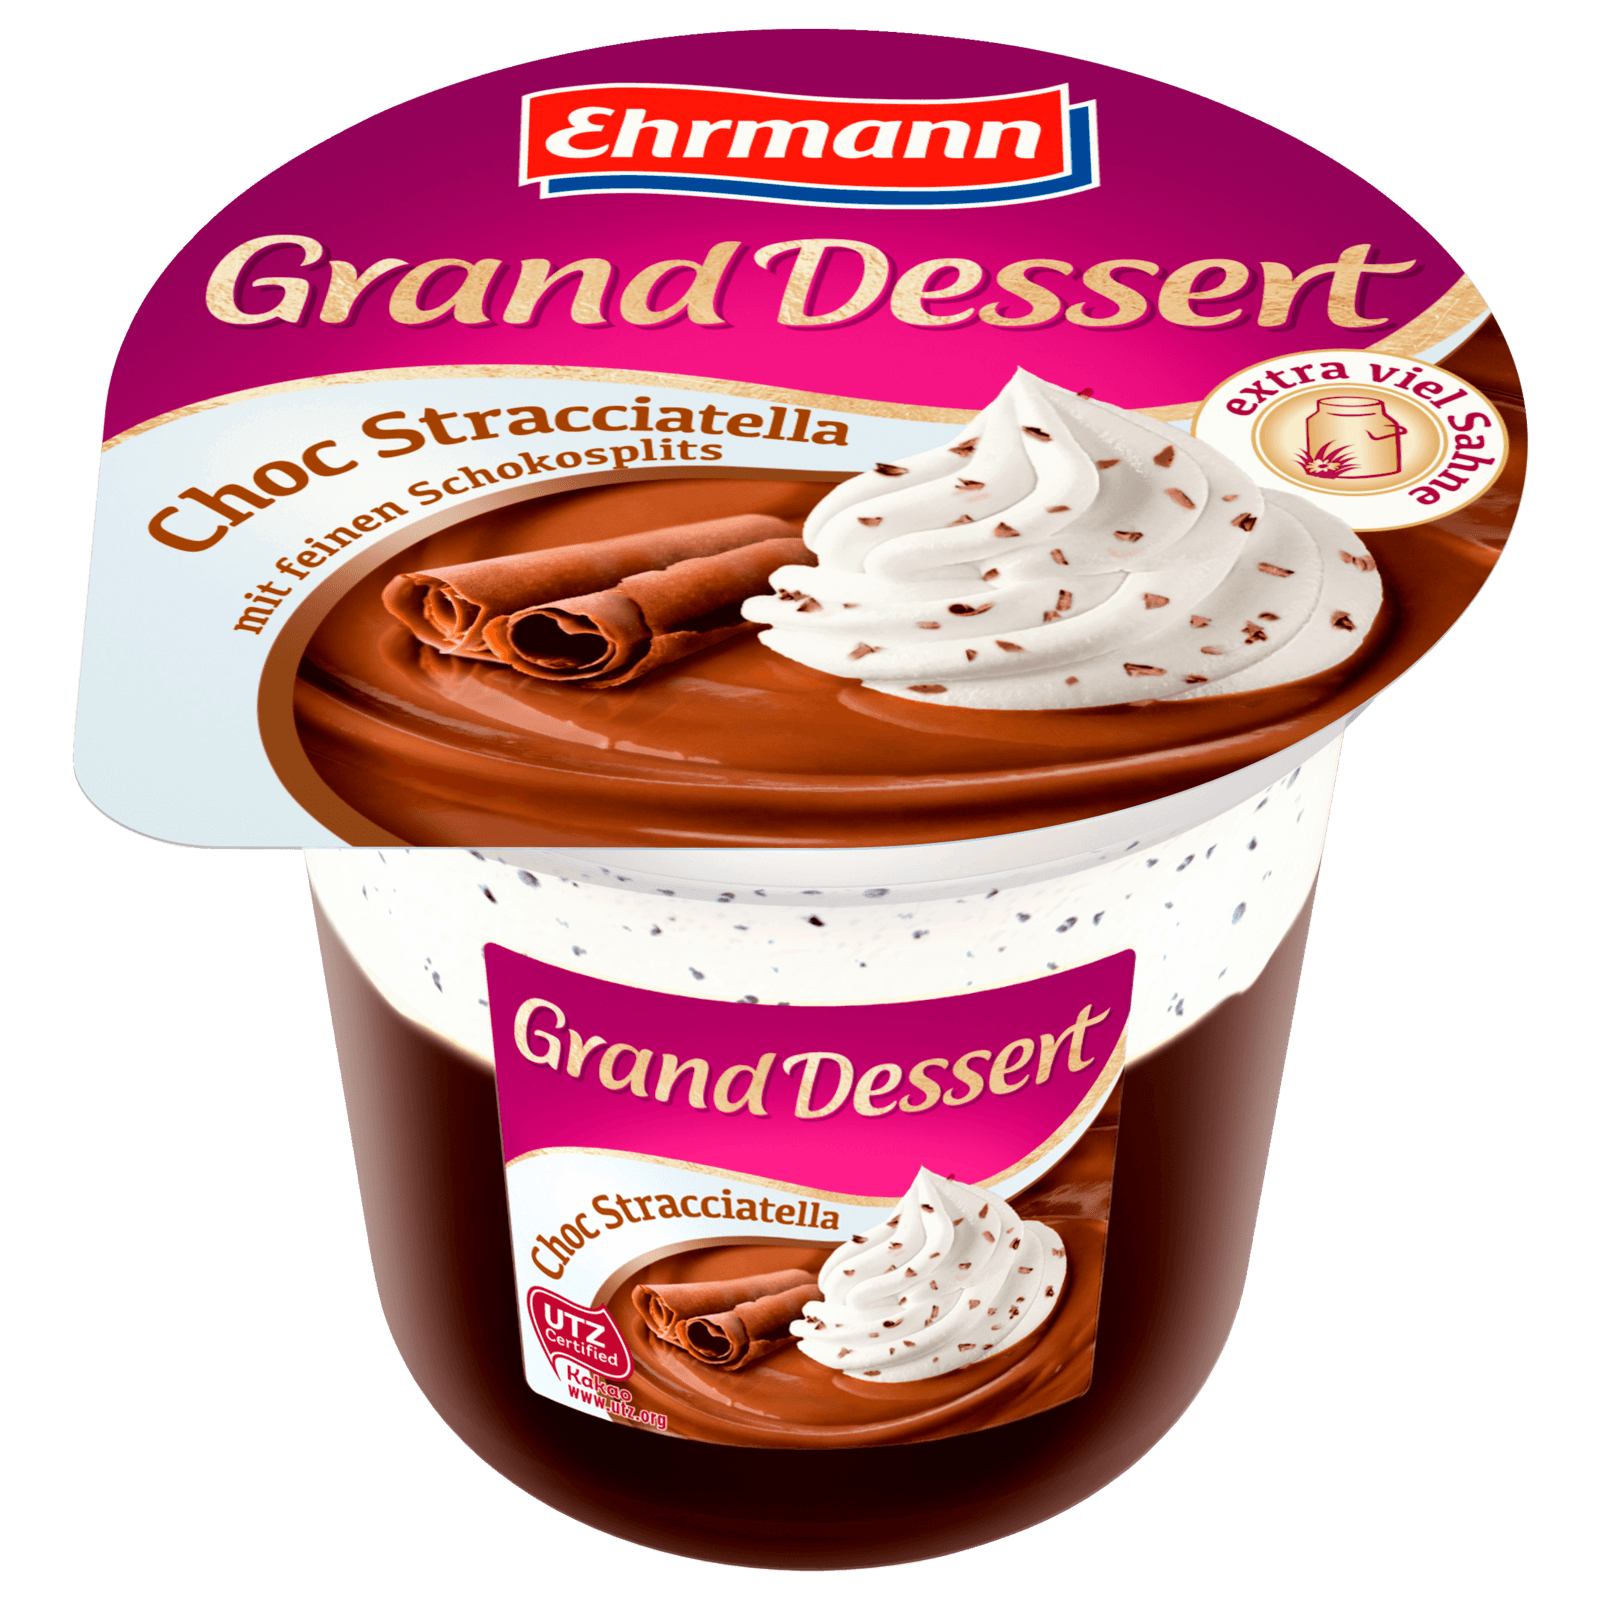 Эрманн Гранд десерт. Пудинг Ehrmann Grand Dessert. Ehrmann Grand шоколадный. Десерт Эрманн шоколадный. Ehrmann grand dessert шоколад